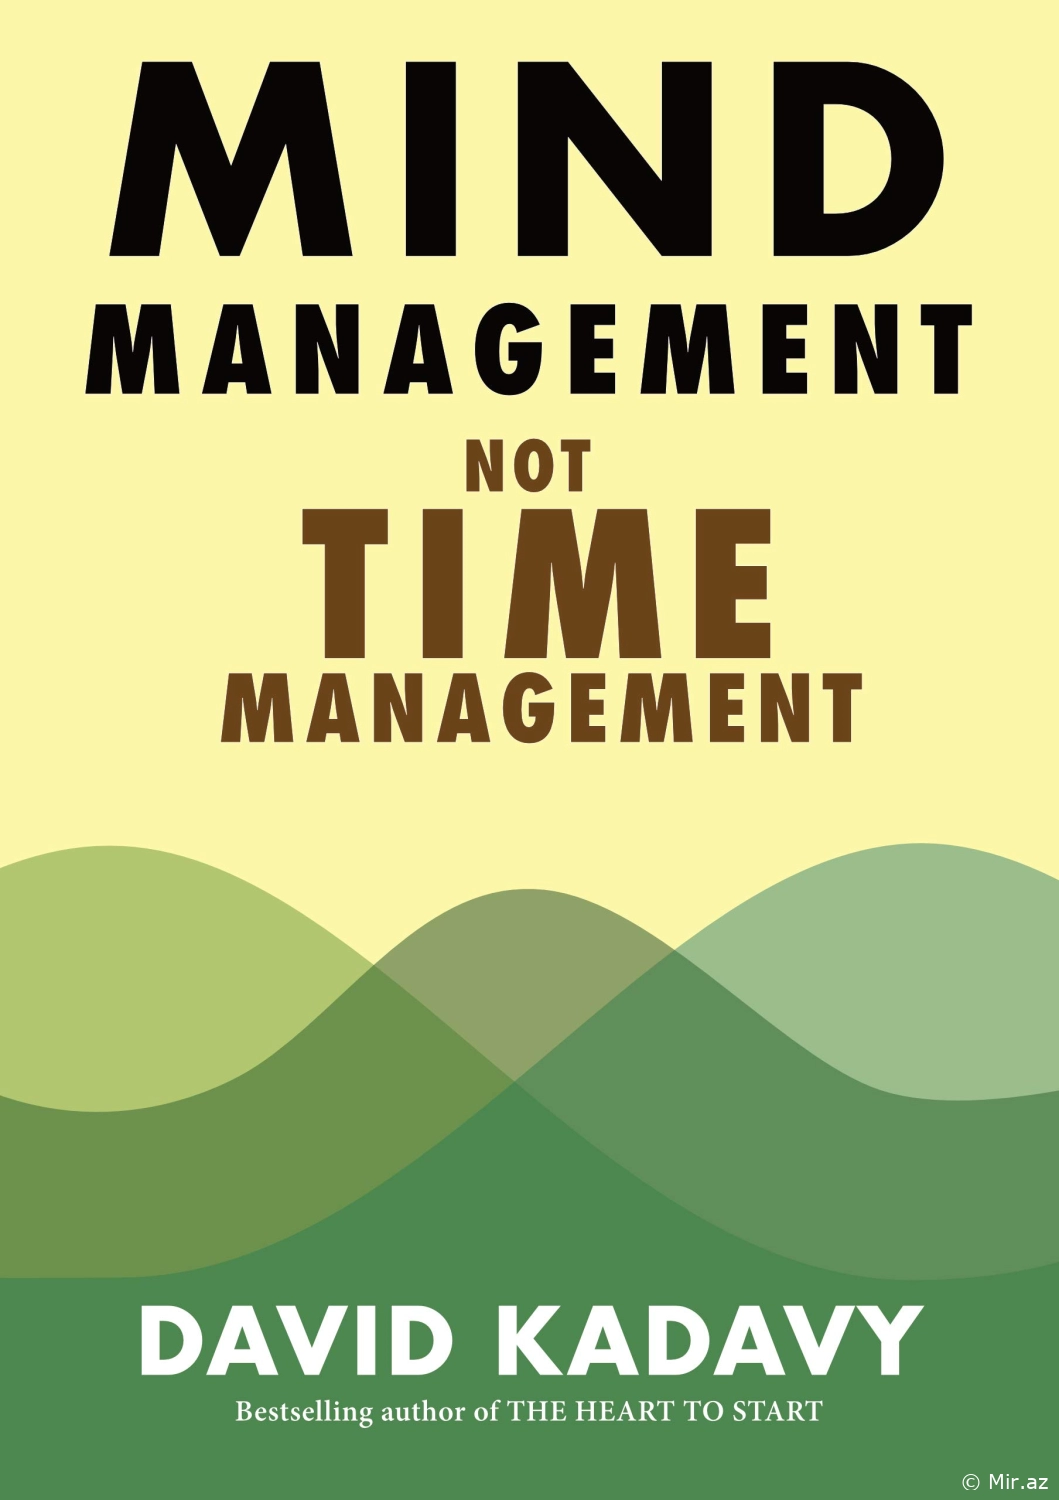 David Kadavy "Mind Management, Not Time Management" PDF